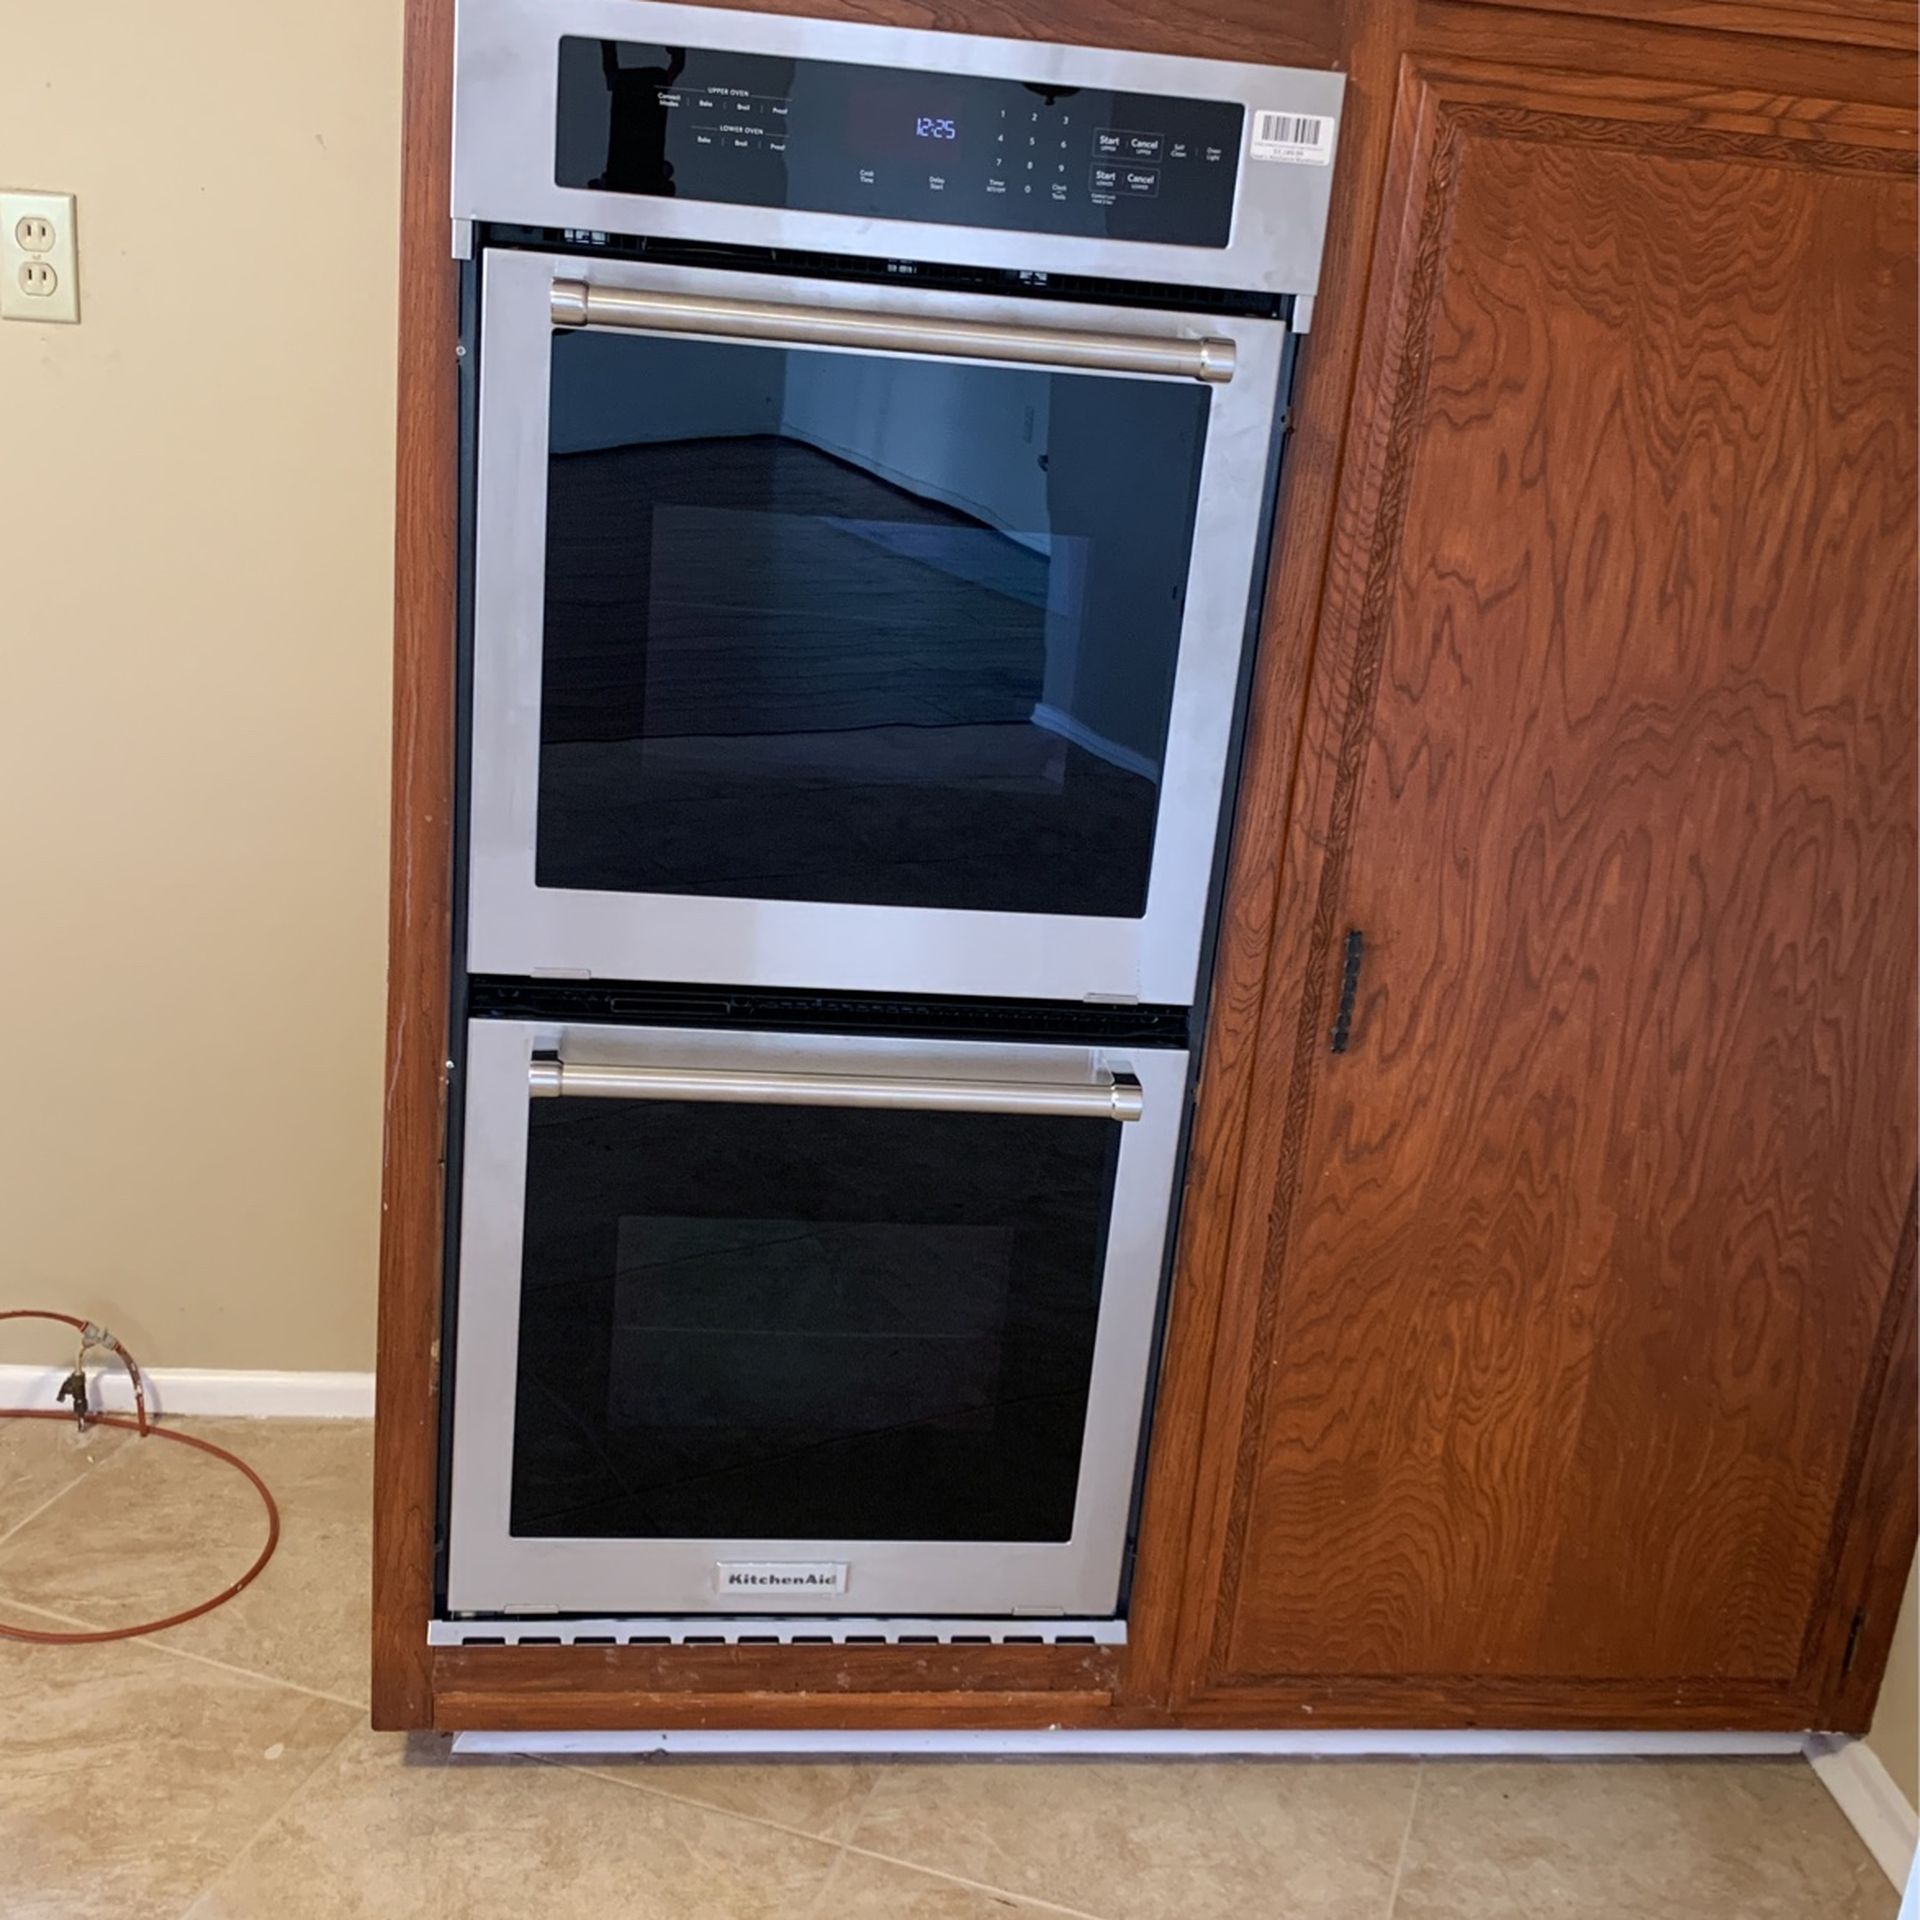 Kitchenaid 24” Electric Double Oven (New) kodc304ess 